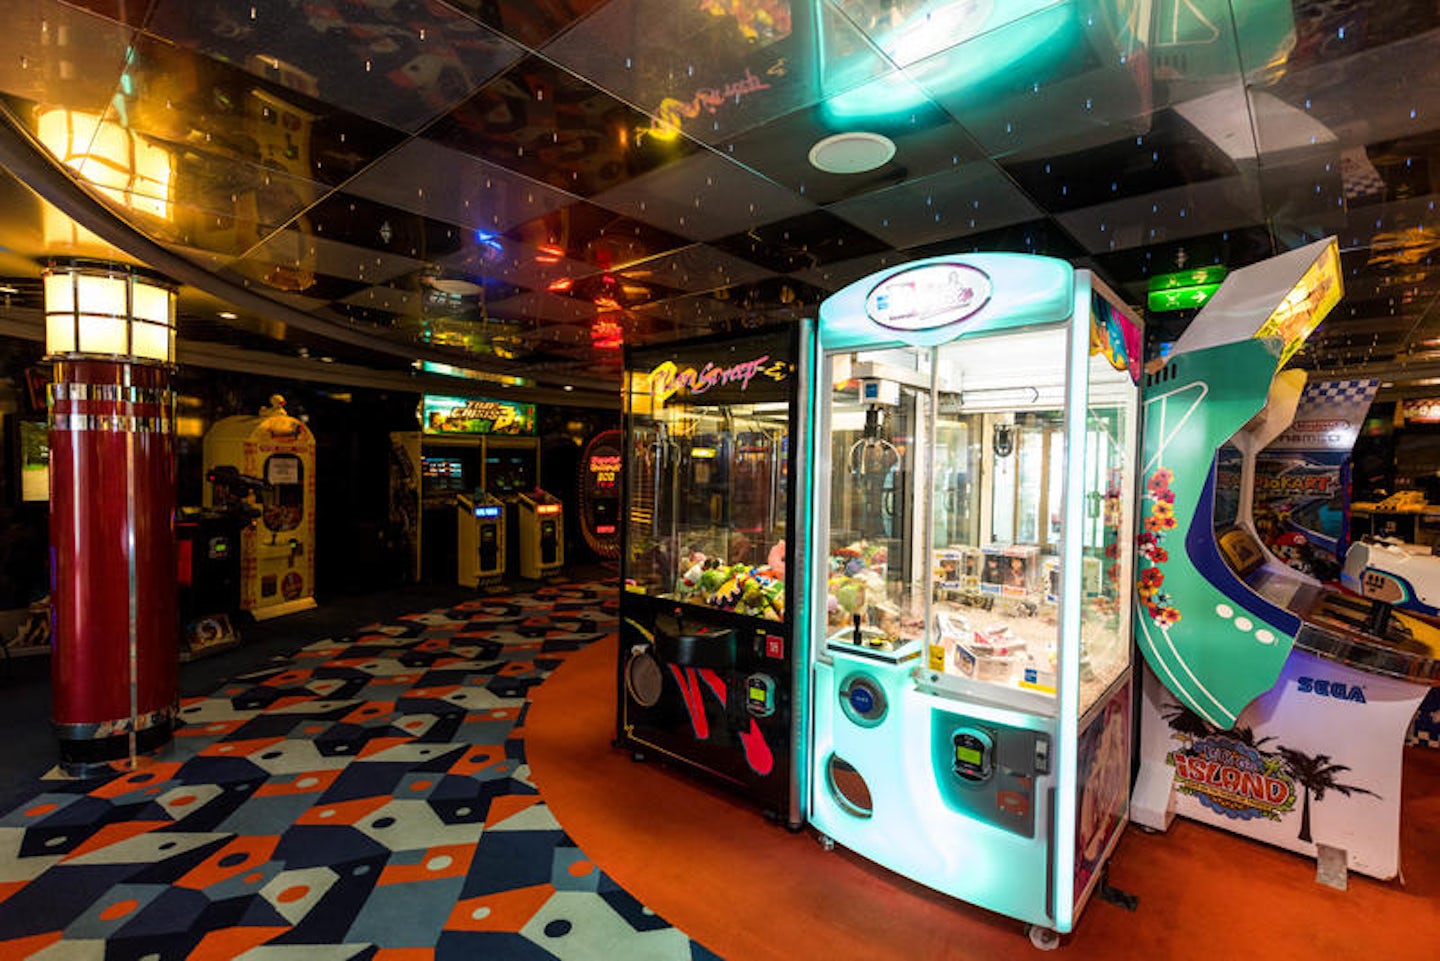 Video Arcade on Adventure of the Seas